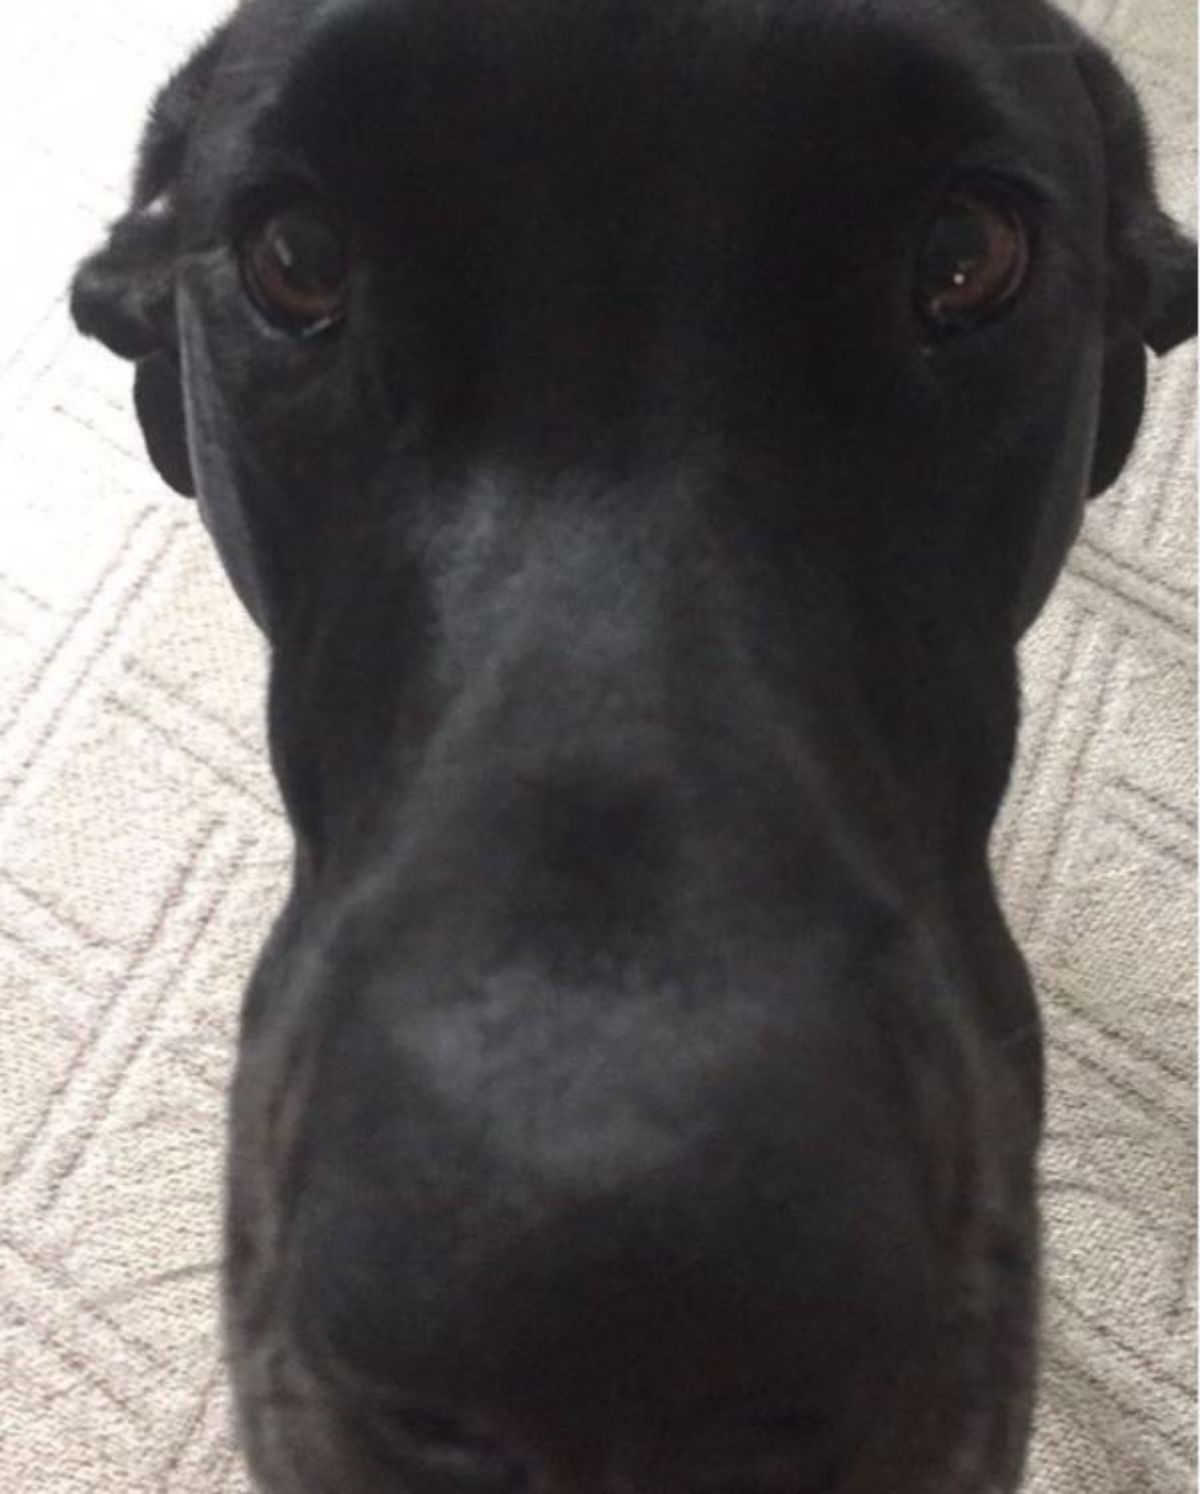 close up face of black great dane dog